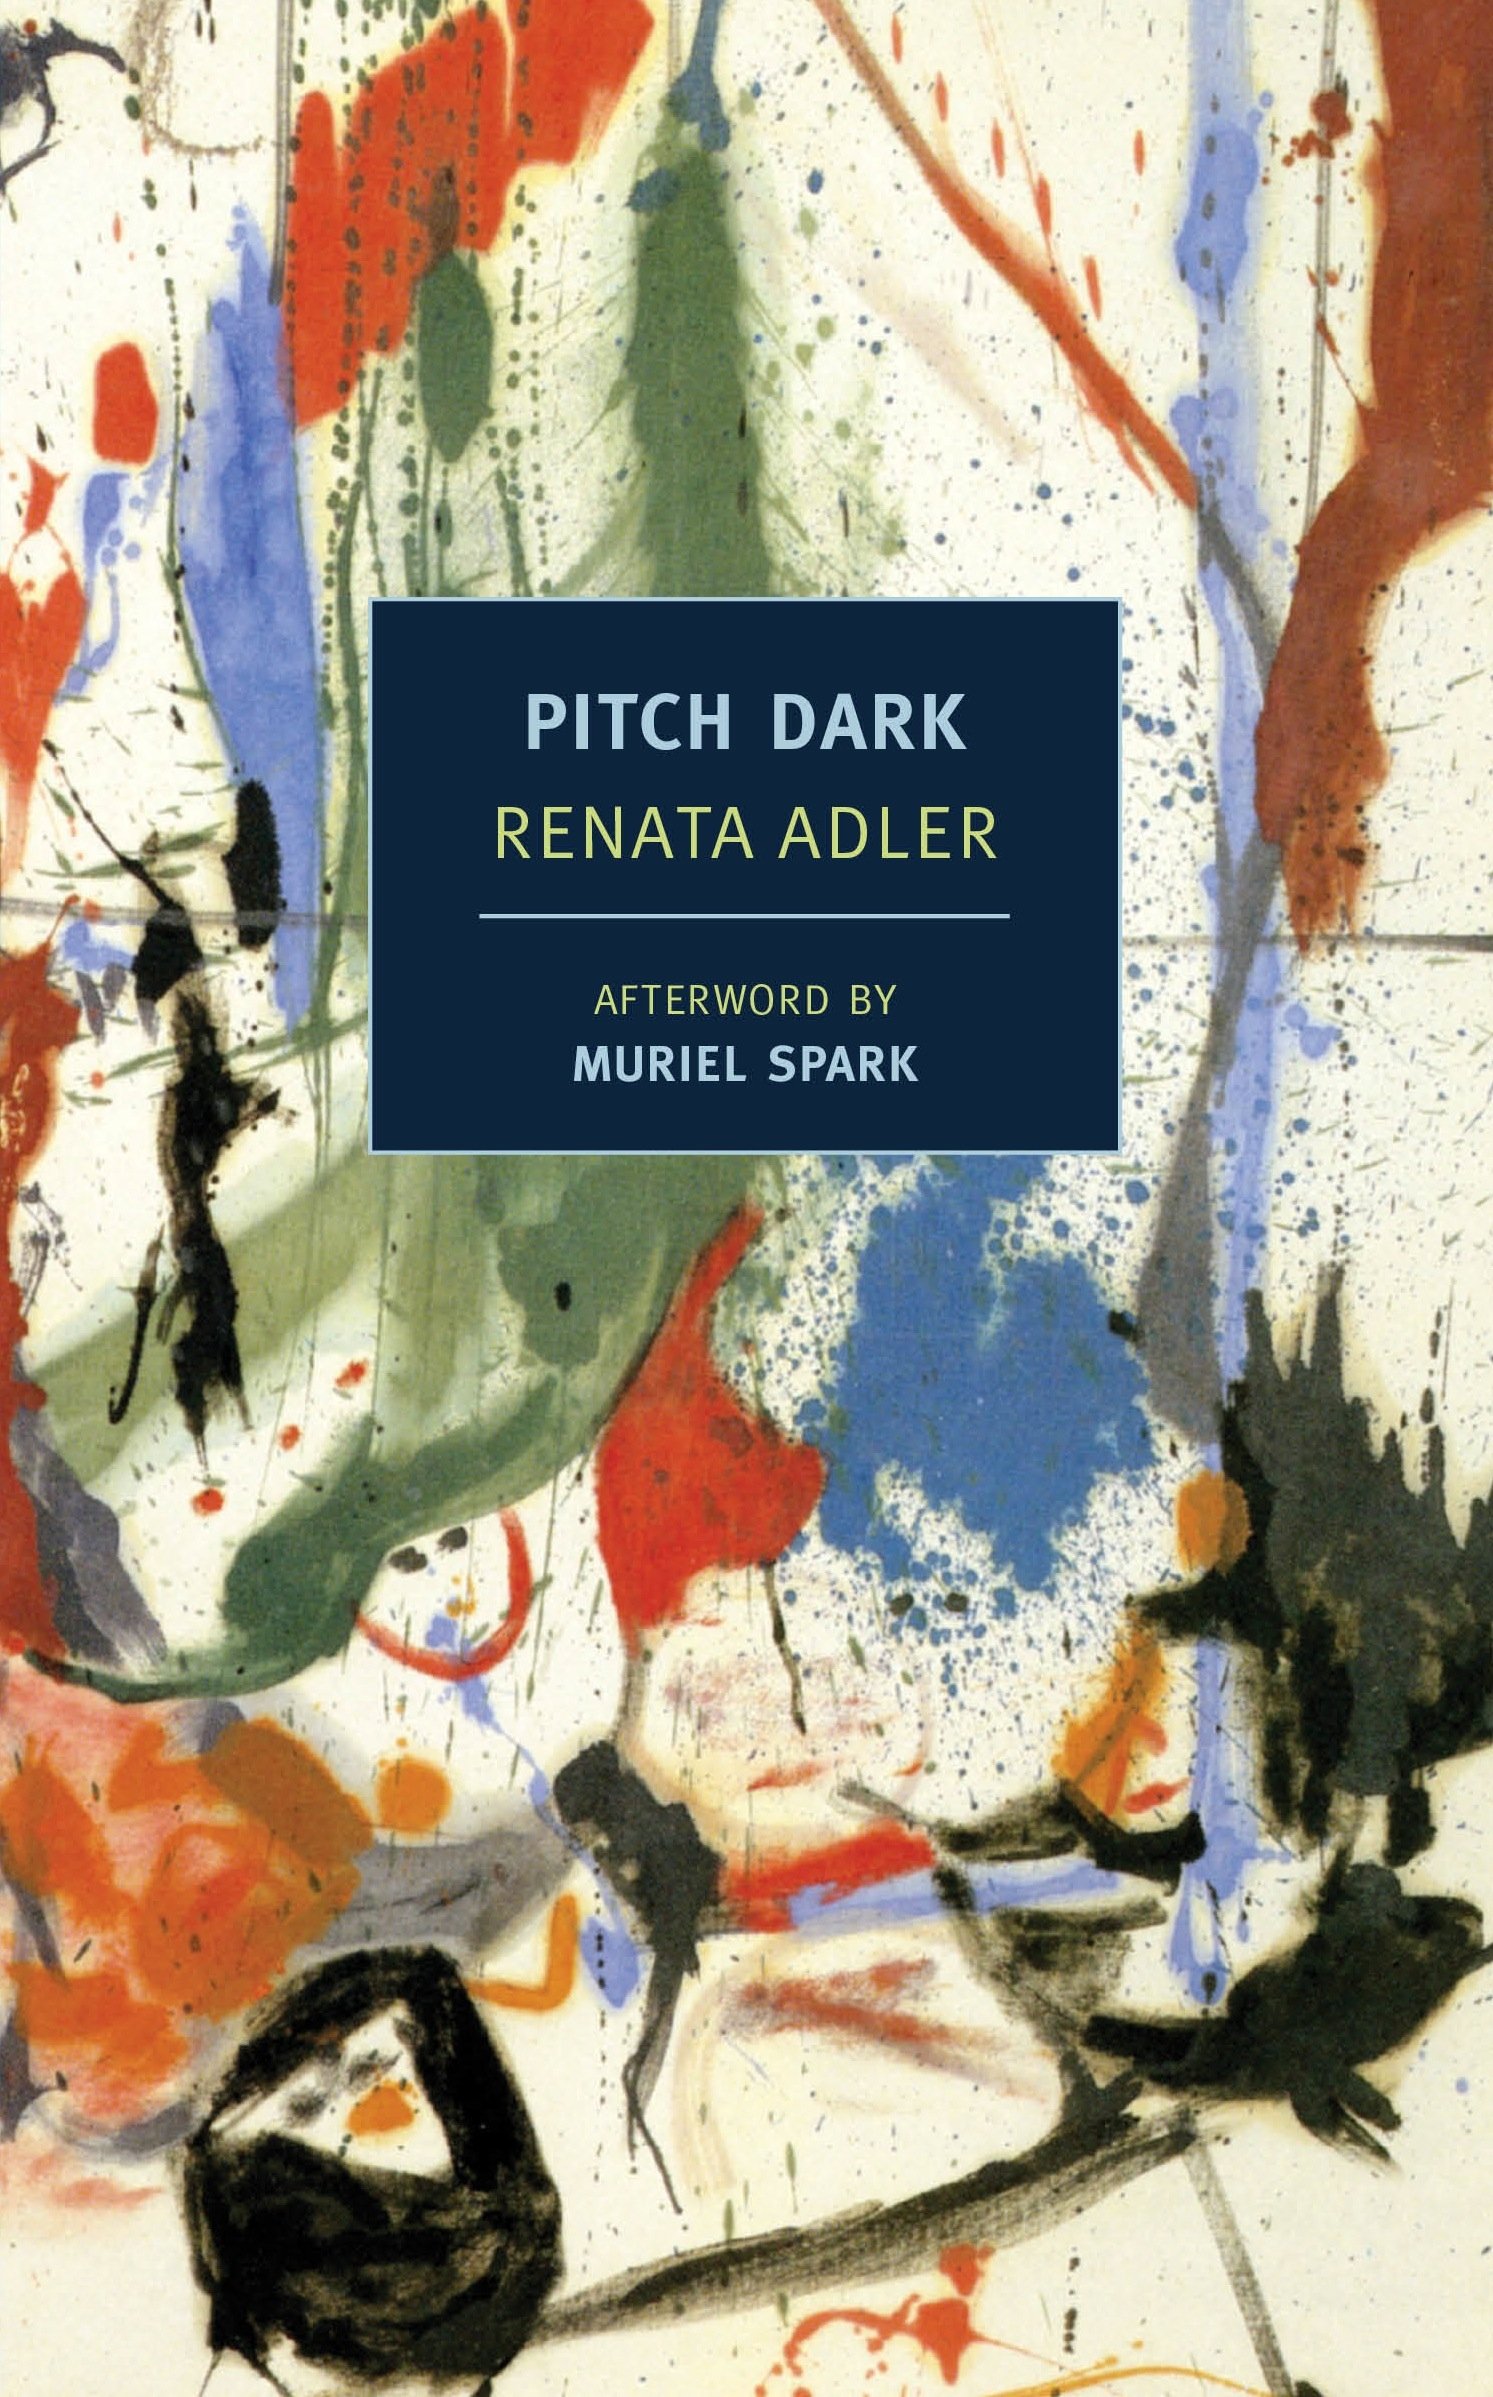 Pitch Dark | Renata Adler image0